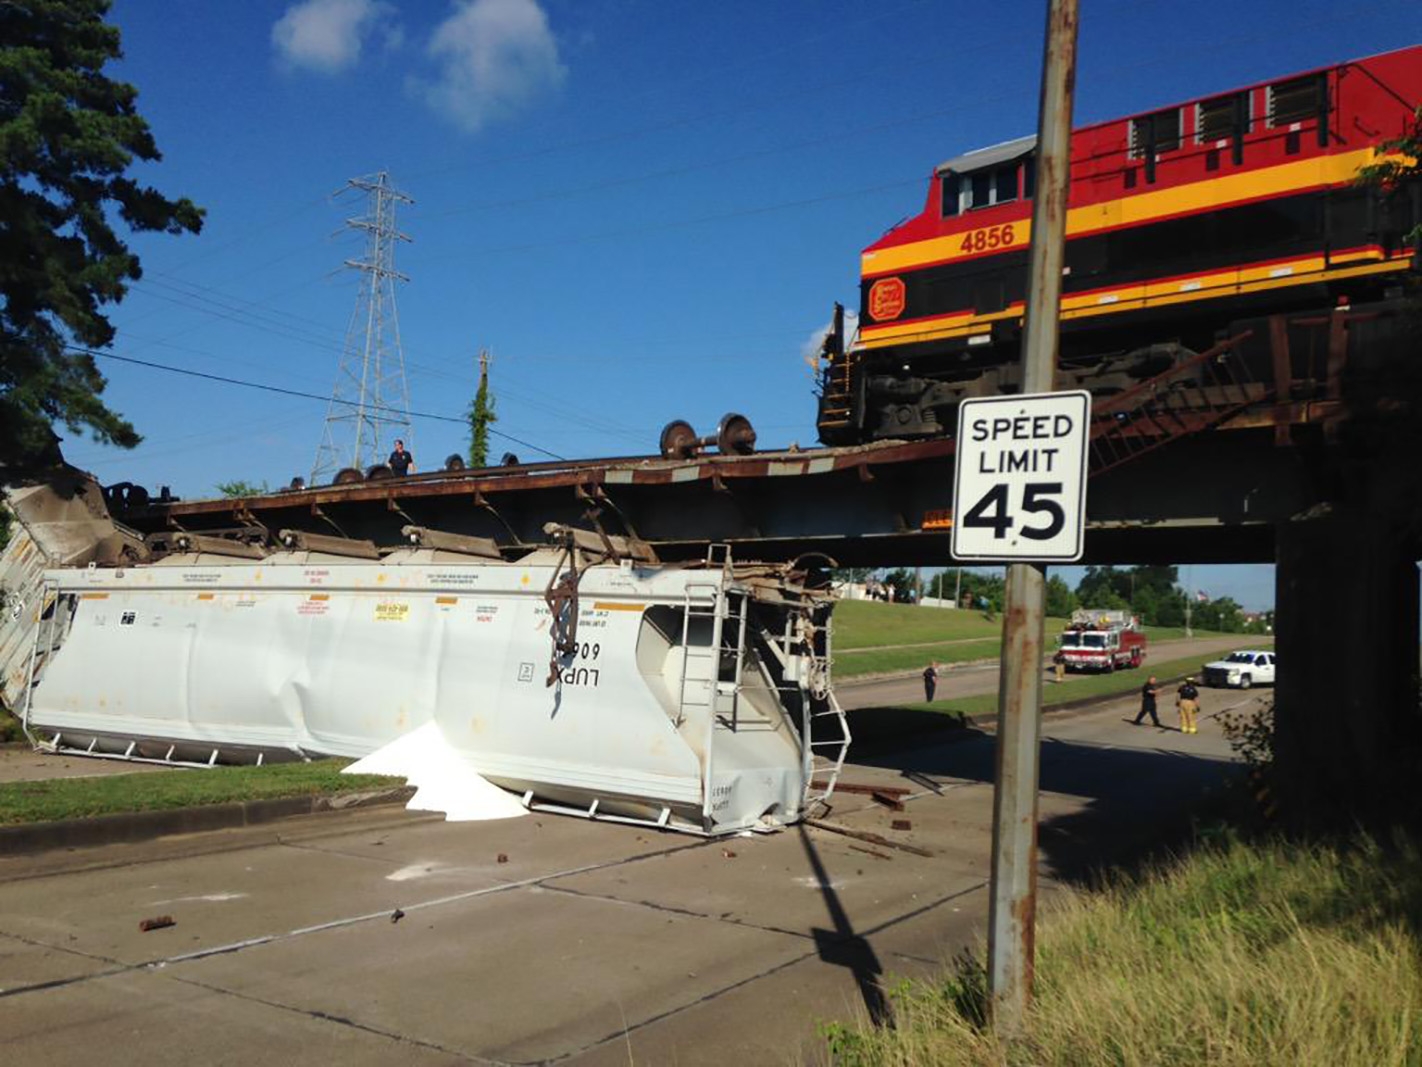 84-car freight train derails in Houston - CBS News